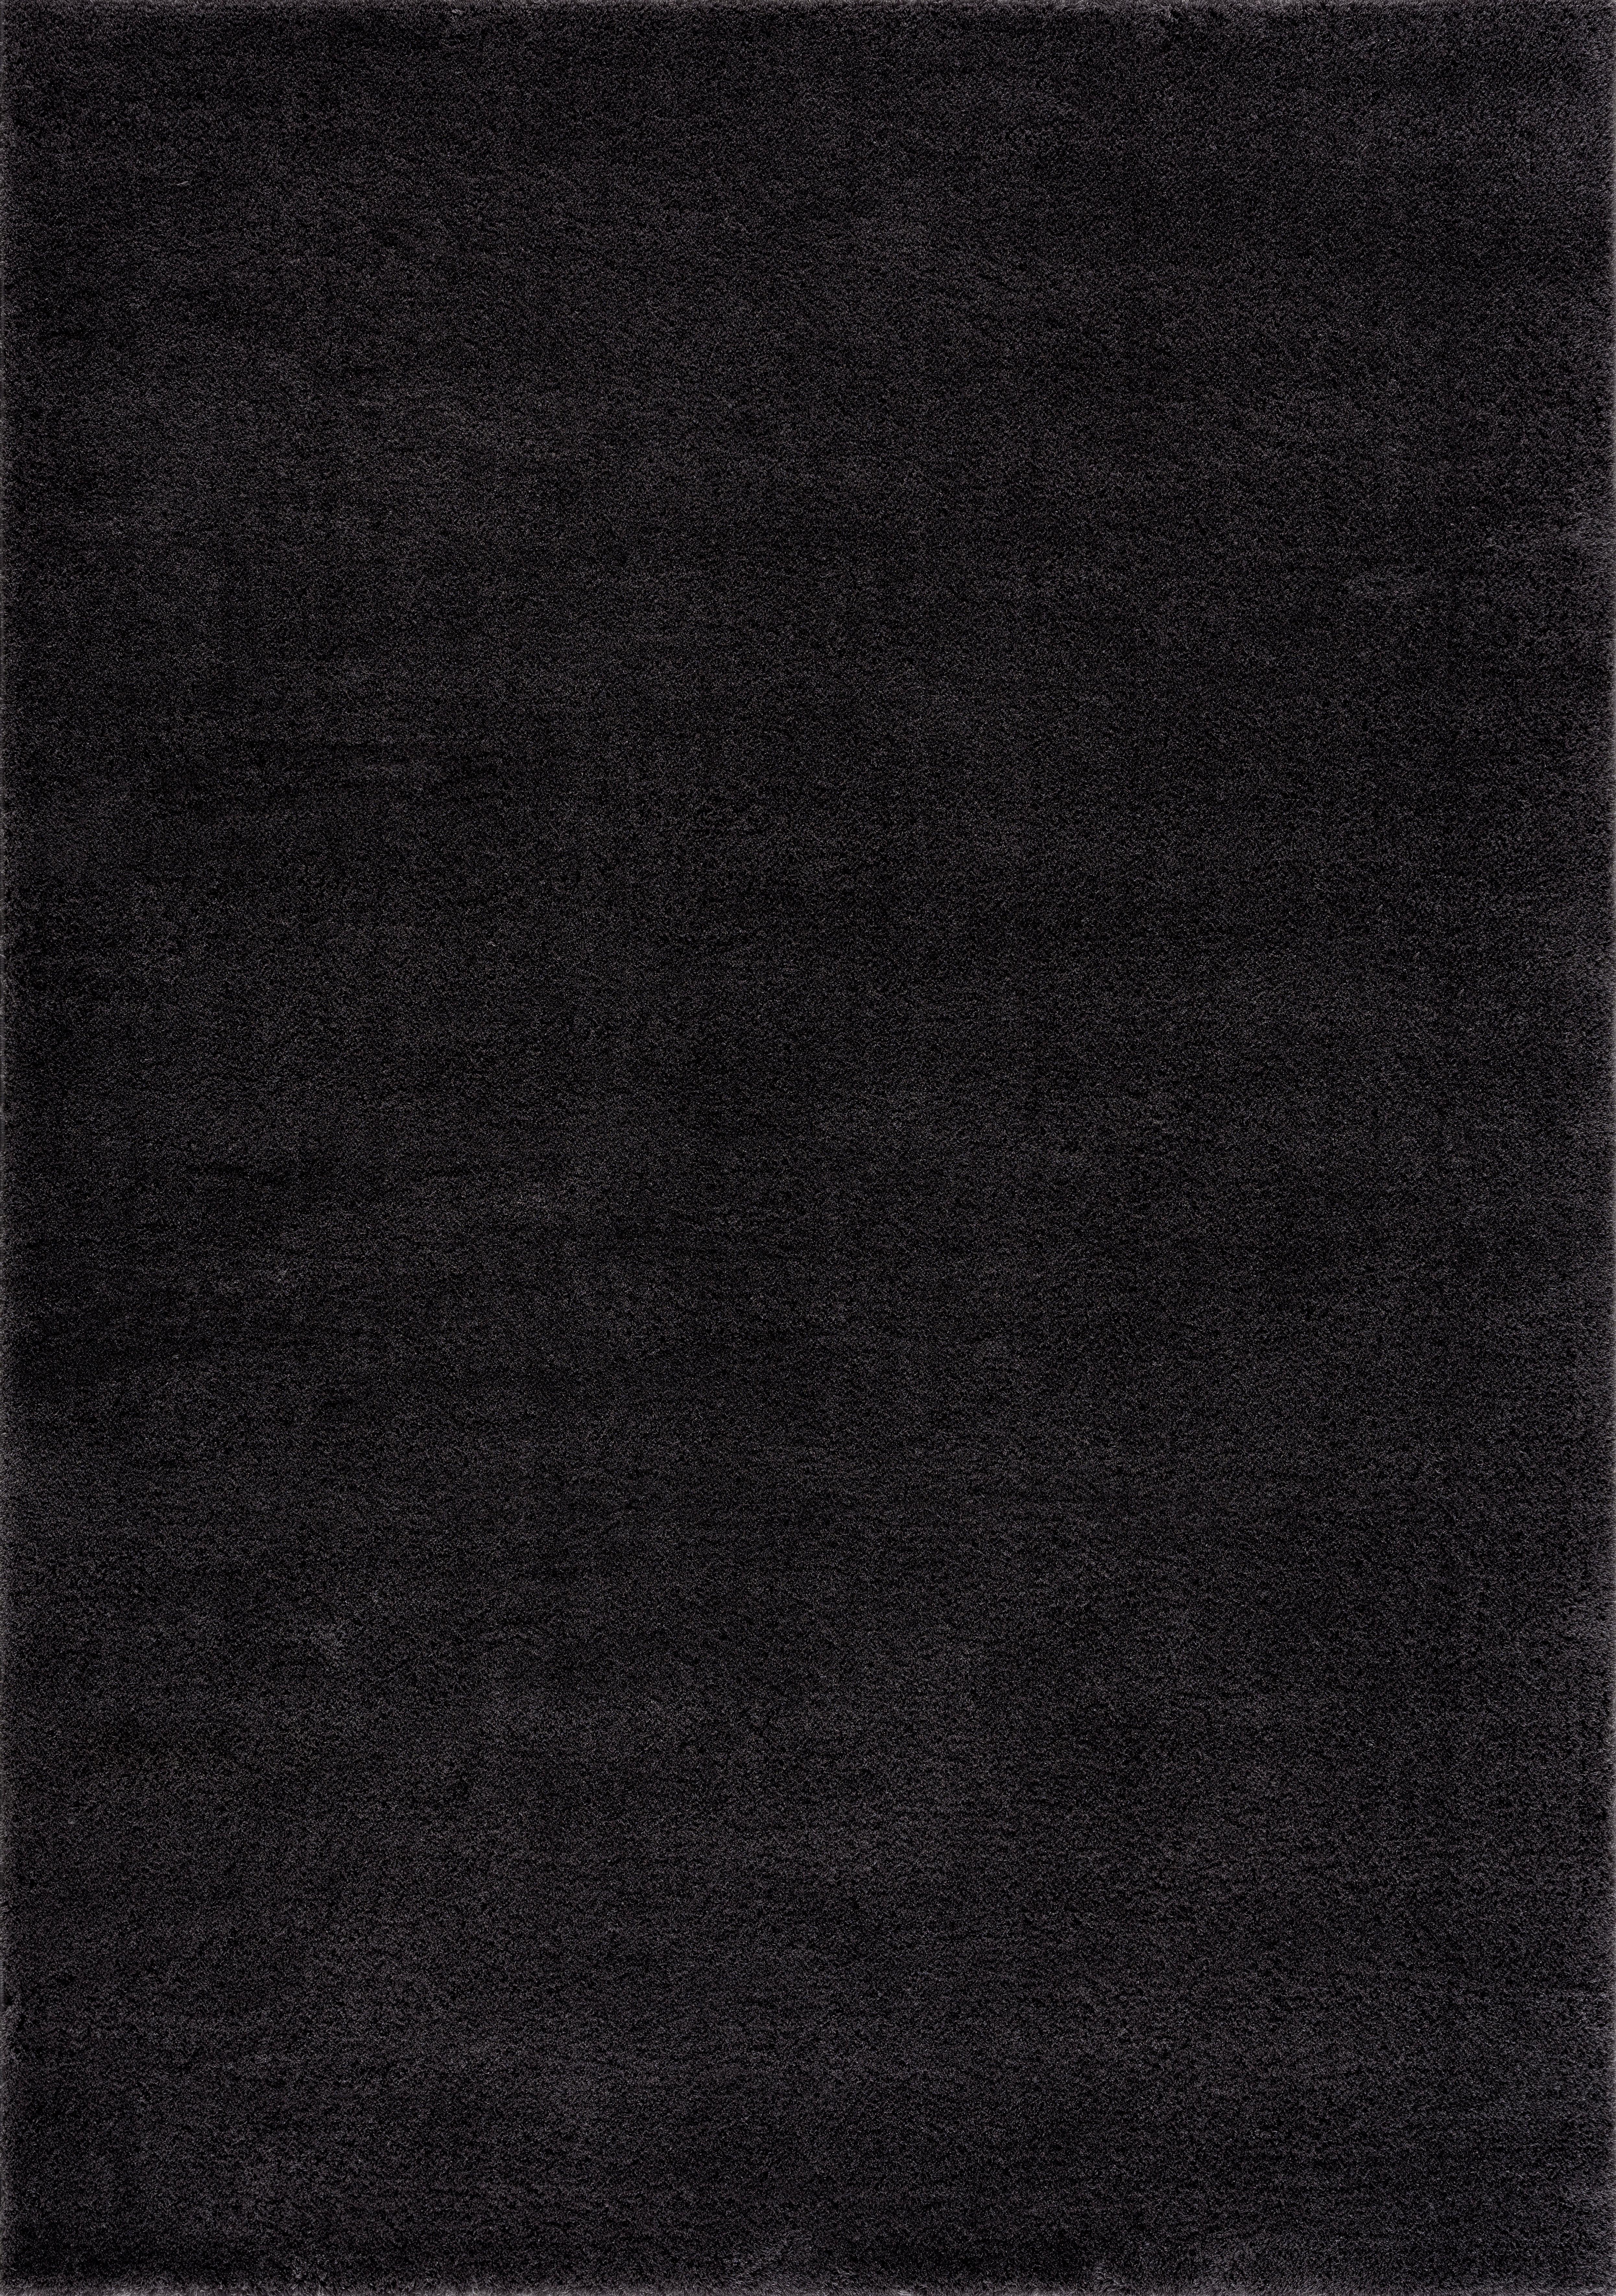 Shaggy Stefan 2 in Anthrazit ca. 120x170cm - Anthrazit, MODERN, Textil (120/170f/30cm) - Modern Living